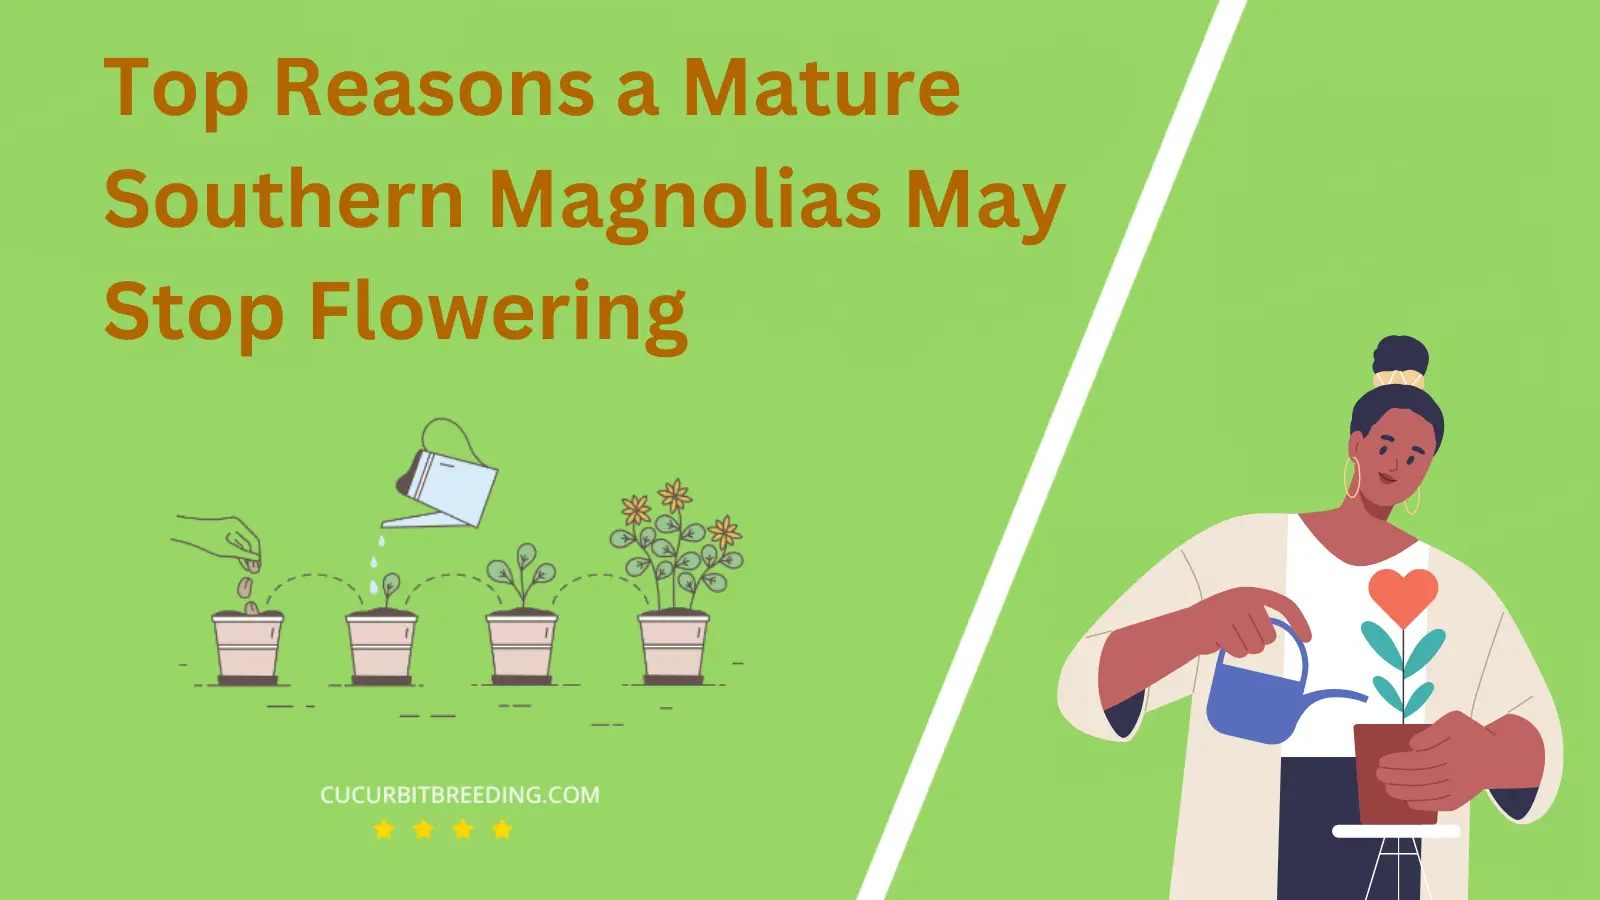 Top Reasons a Mature Southern Magnolias May Stop Flowering